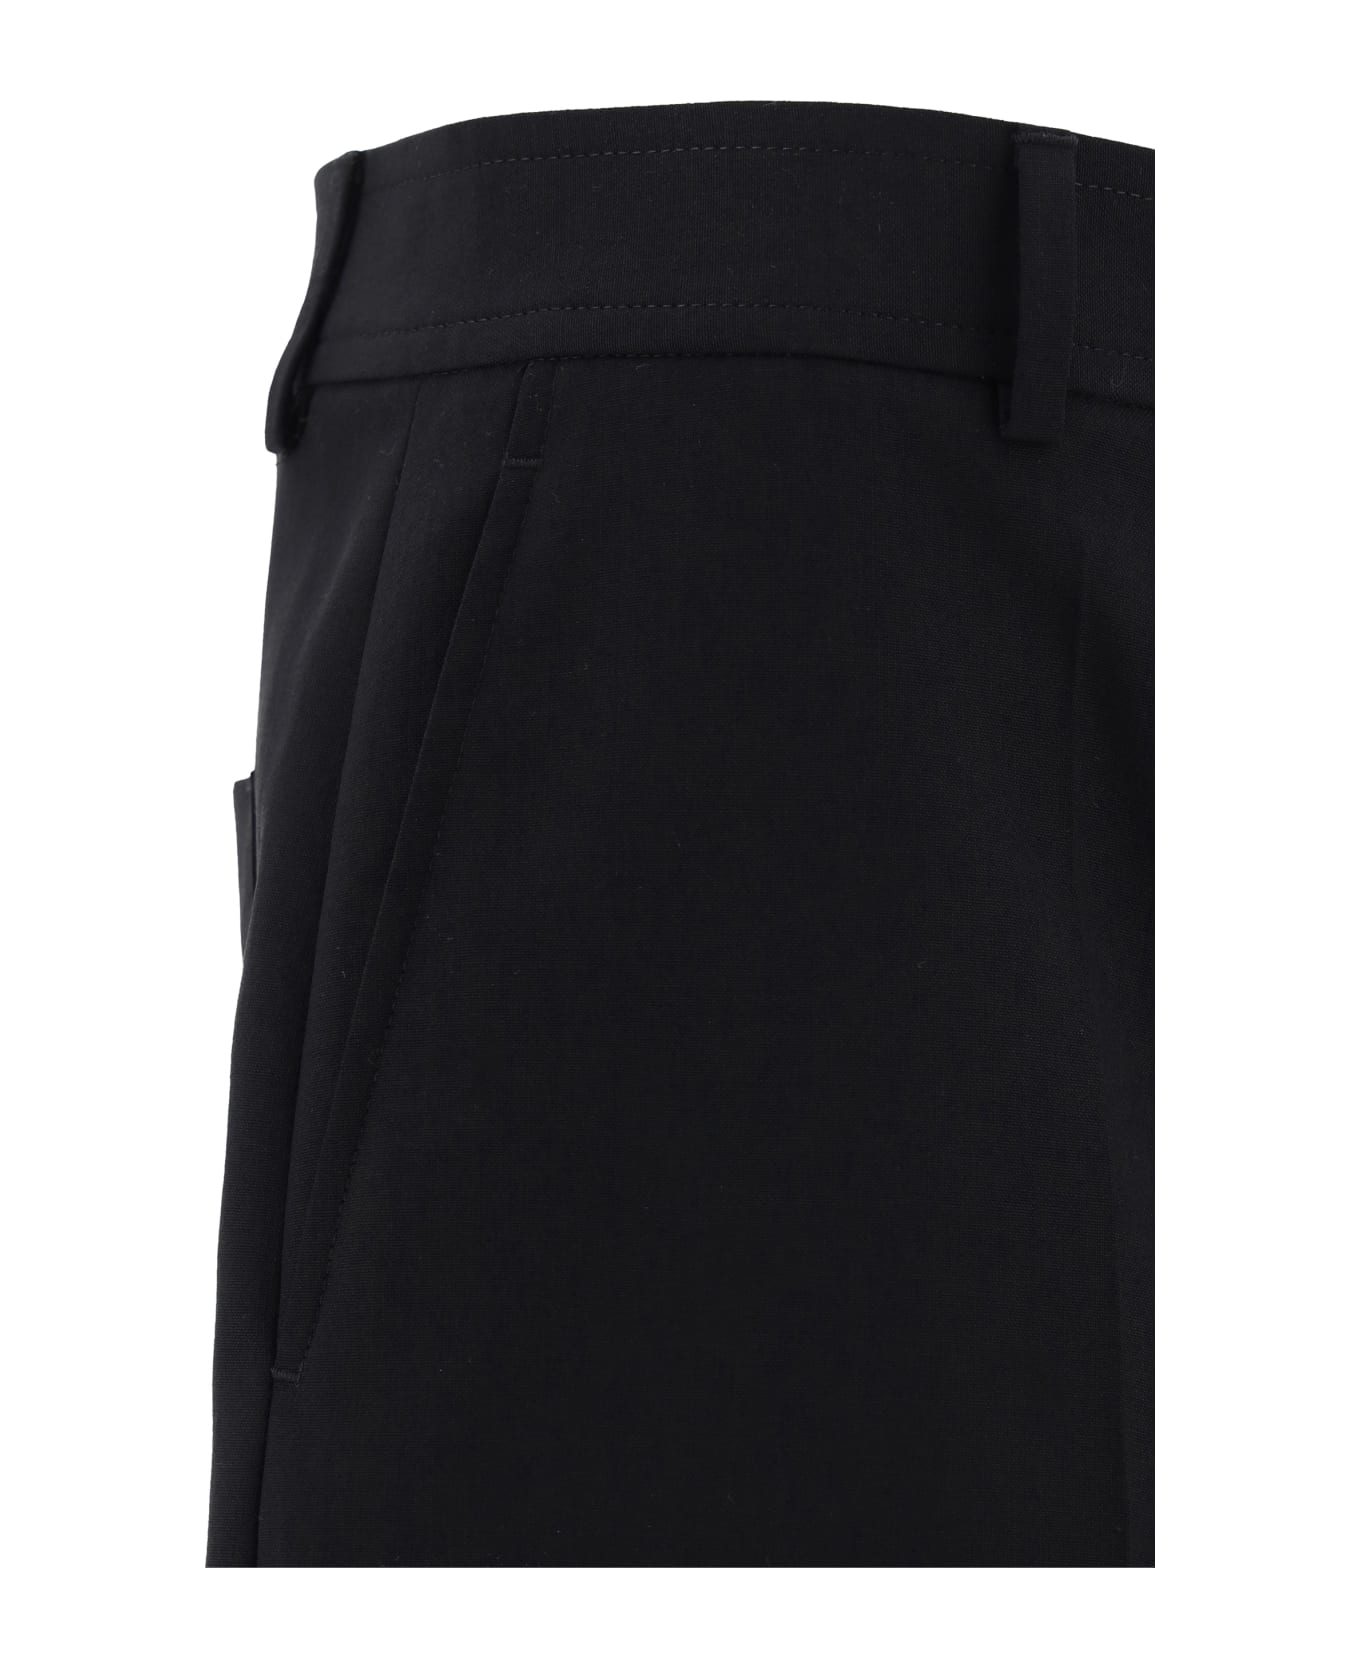 Valentino Mid-rise Beruda Shorts - Black ショートパンツ